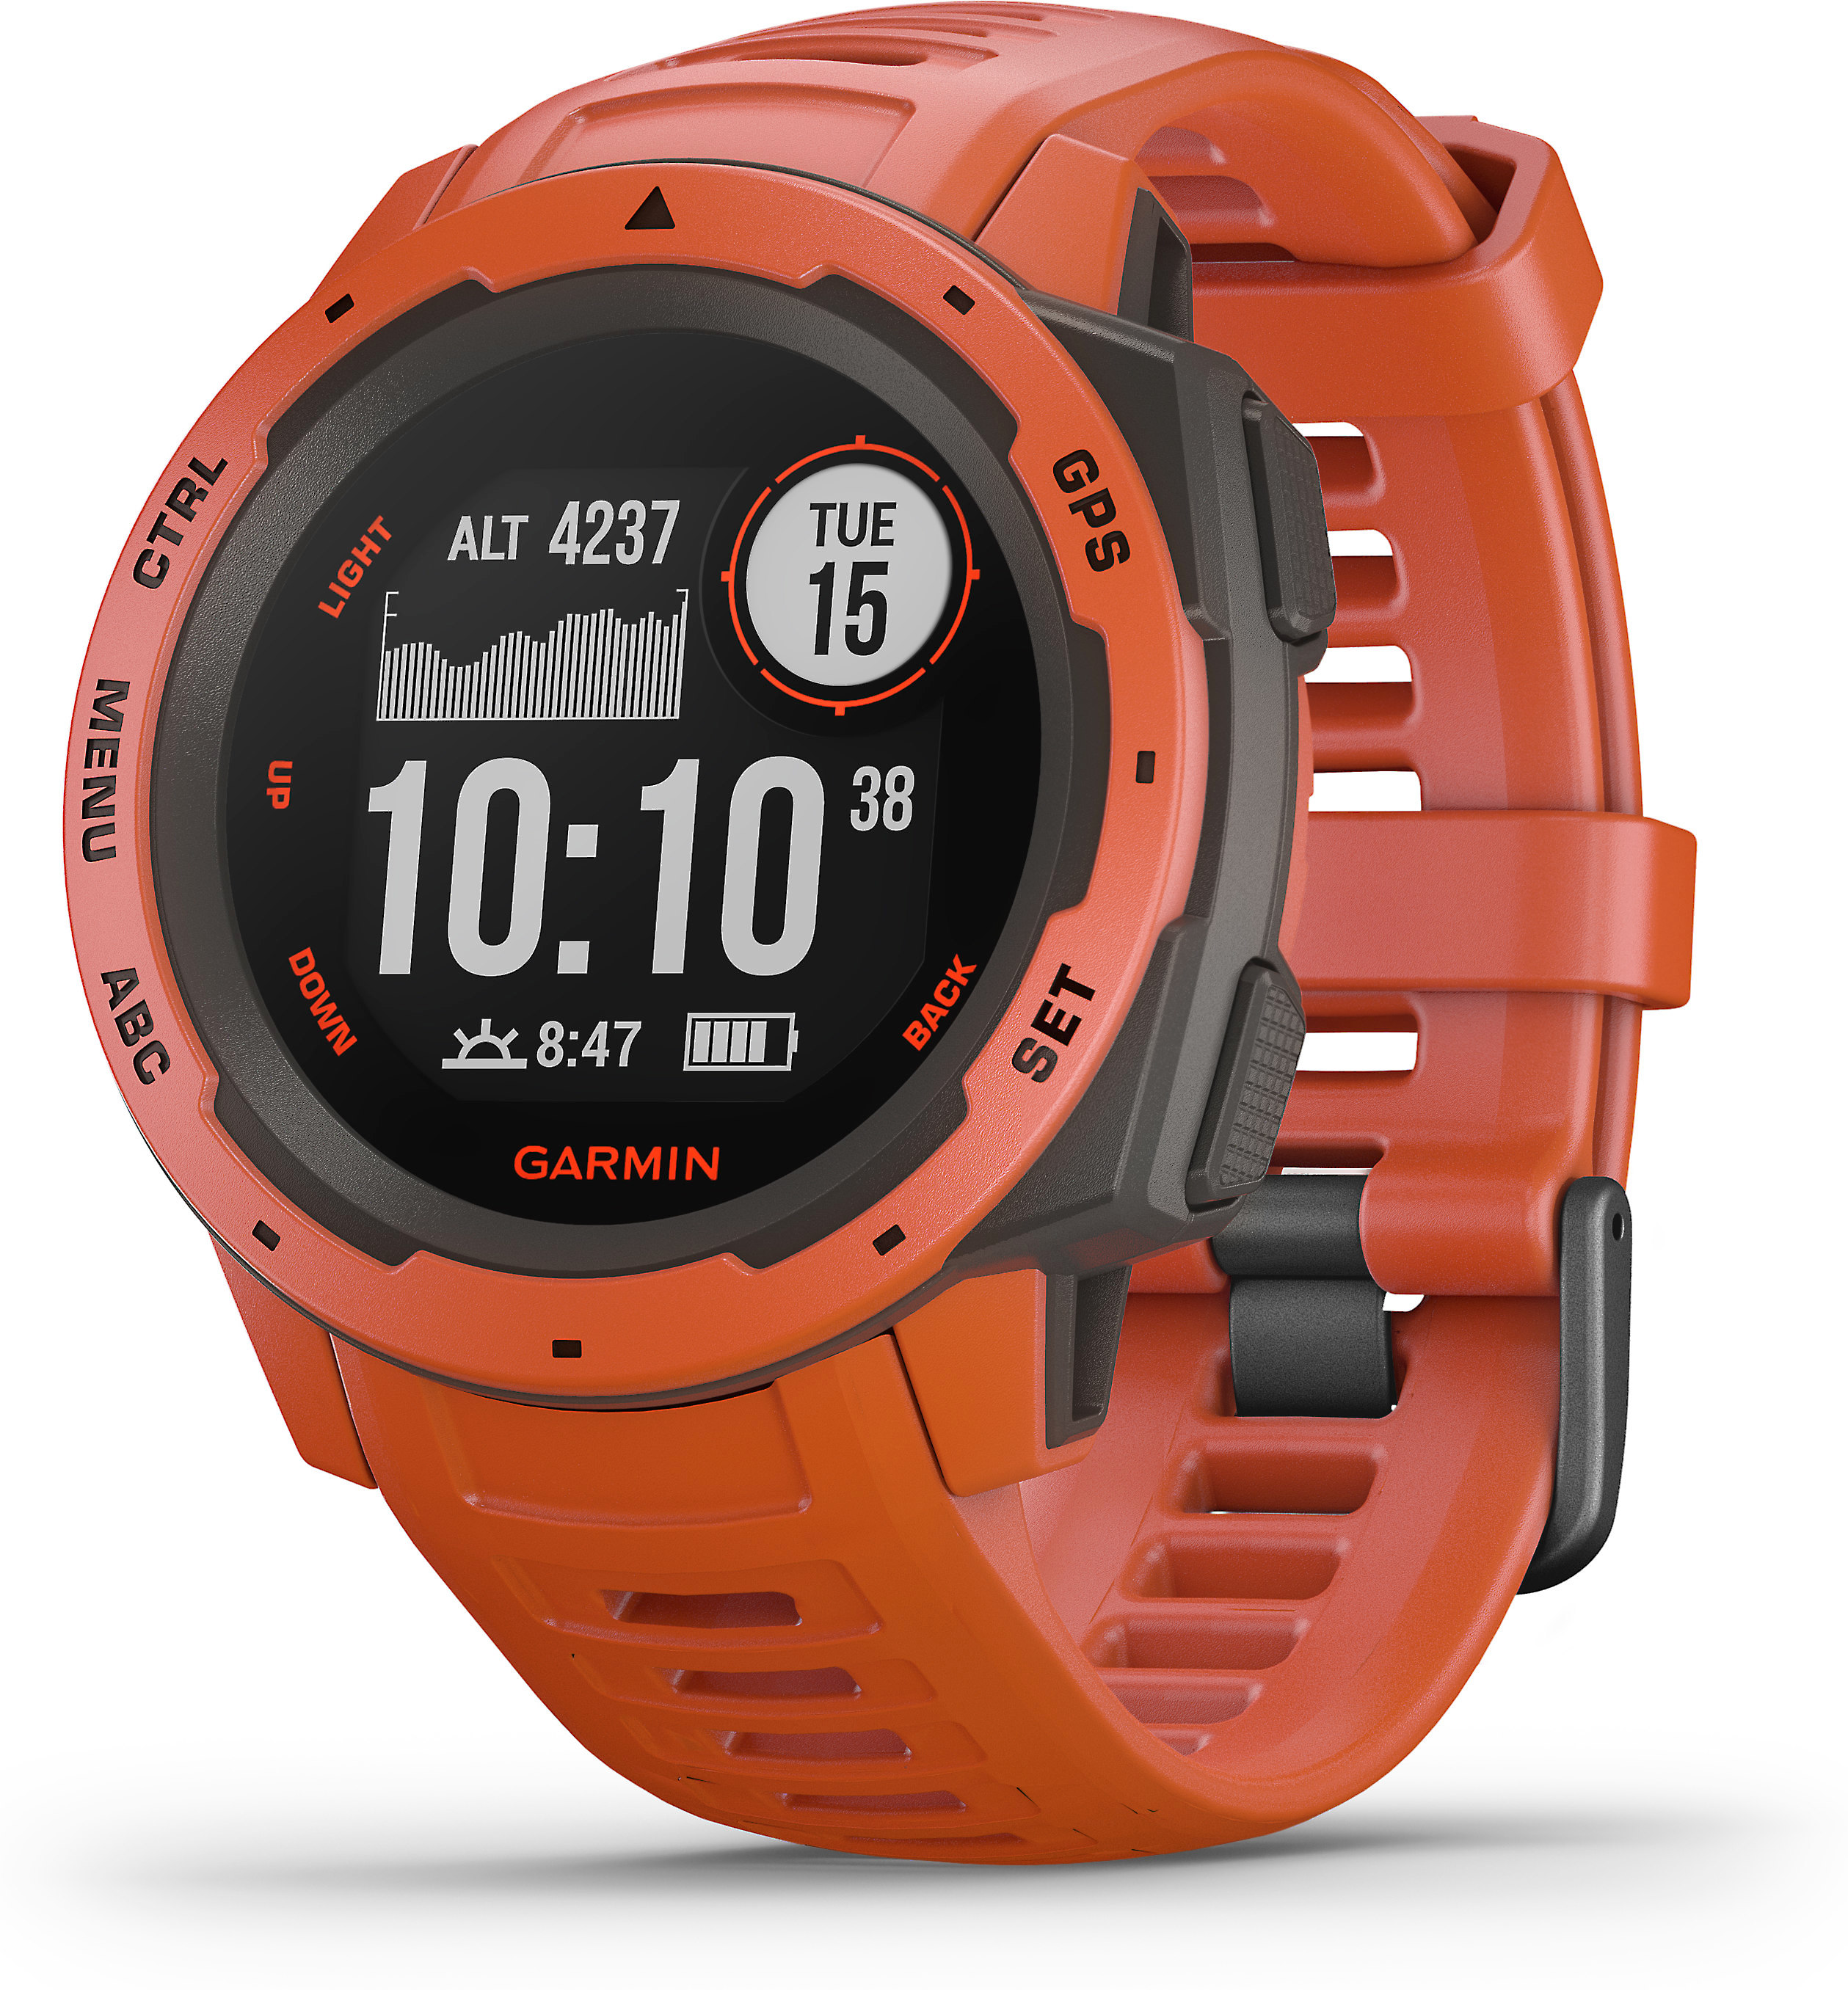 Customer Reviews: Garmin Red) Rugged GPS multisport watch at